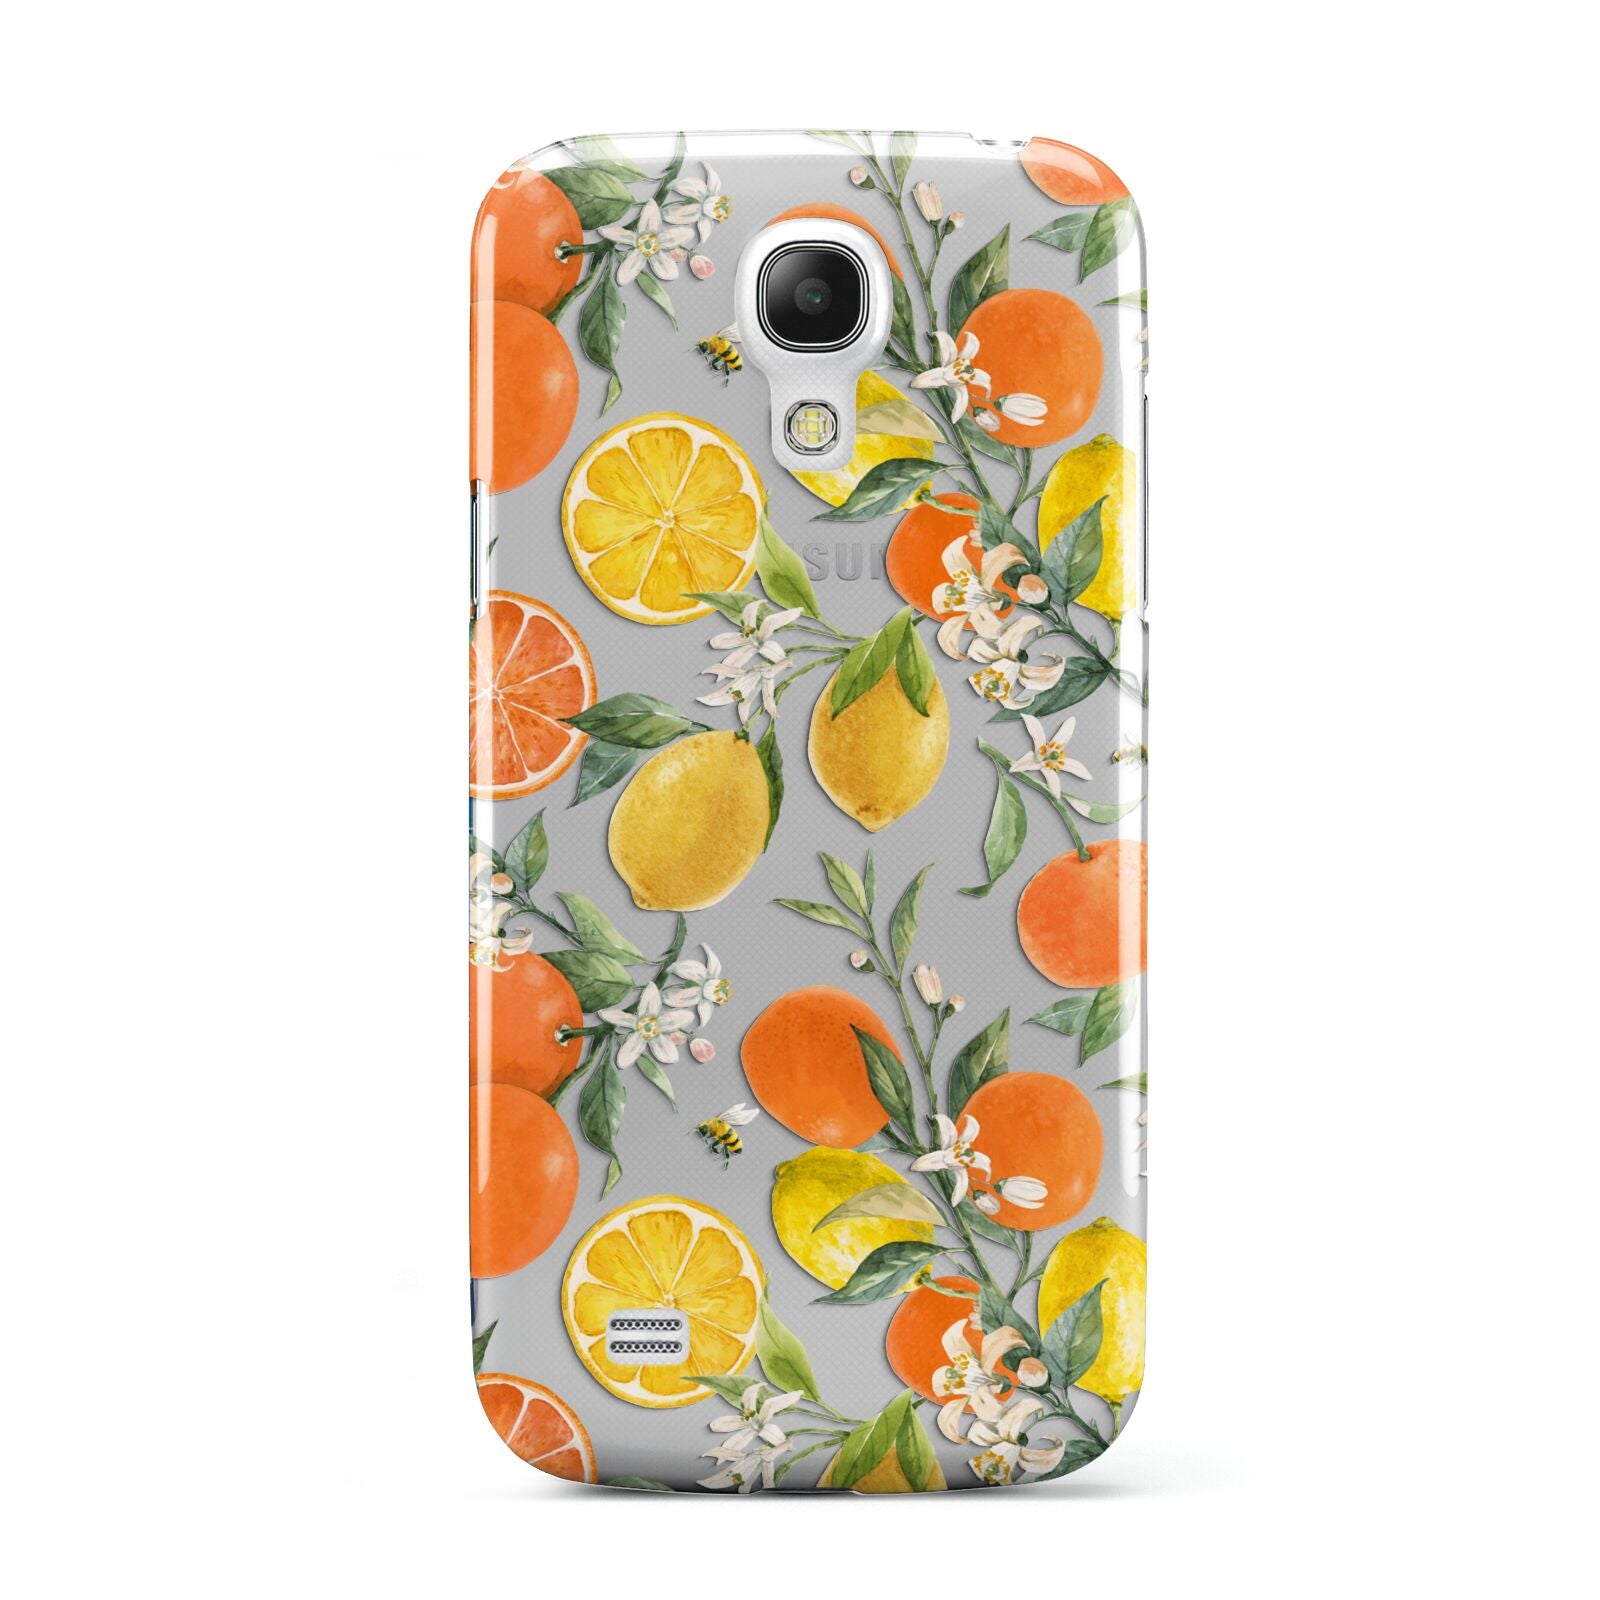 Lemons and Oranges Samsung Galaxy S4 Mini Case